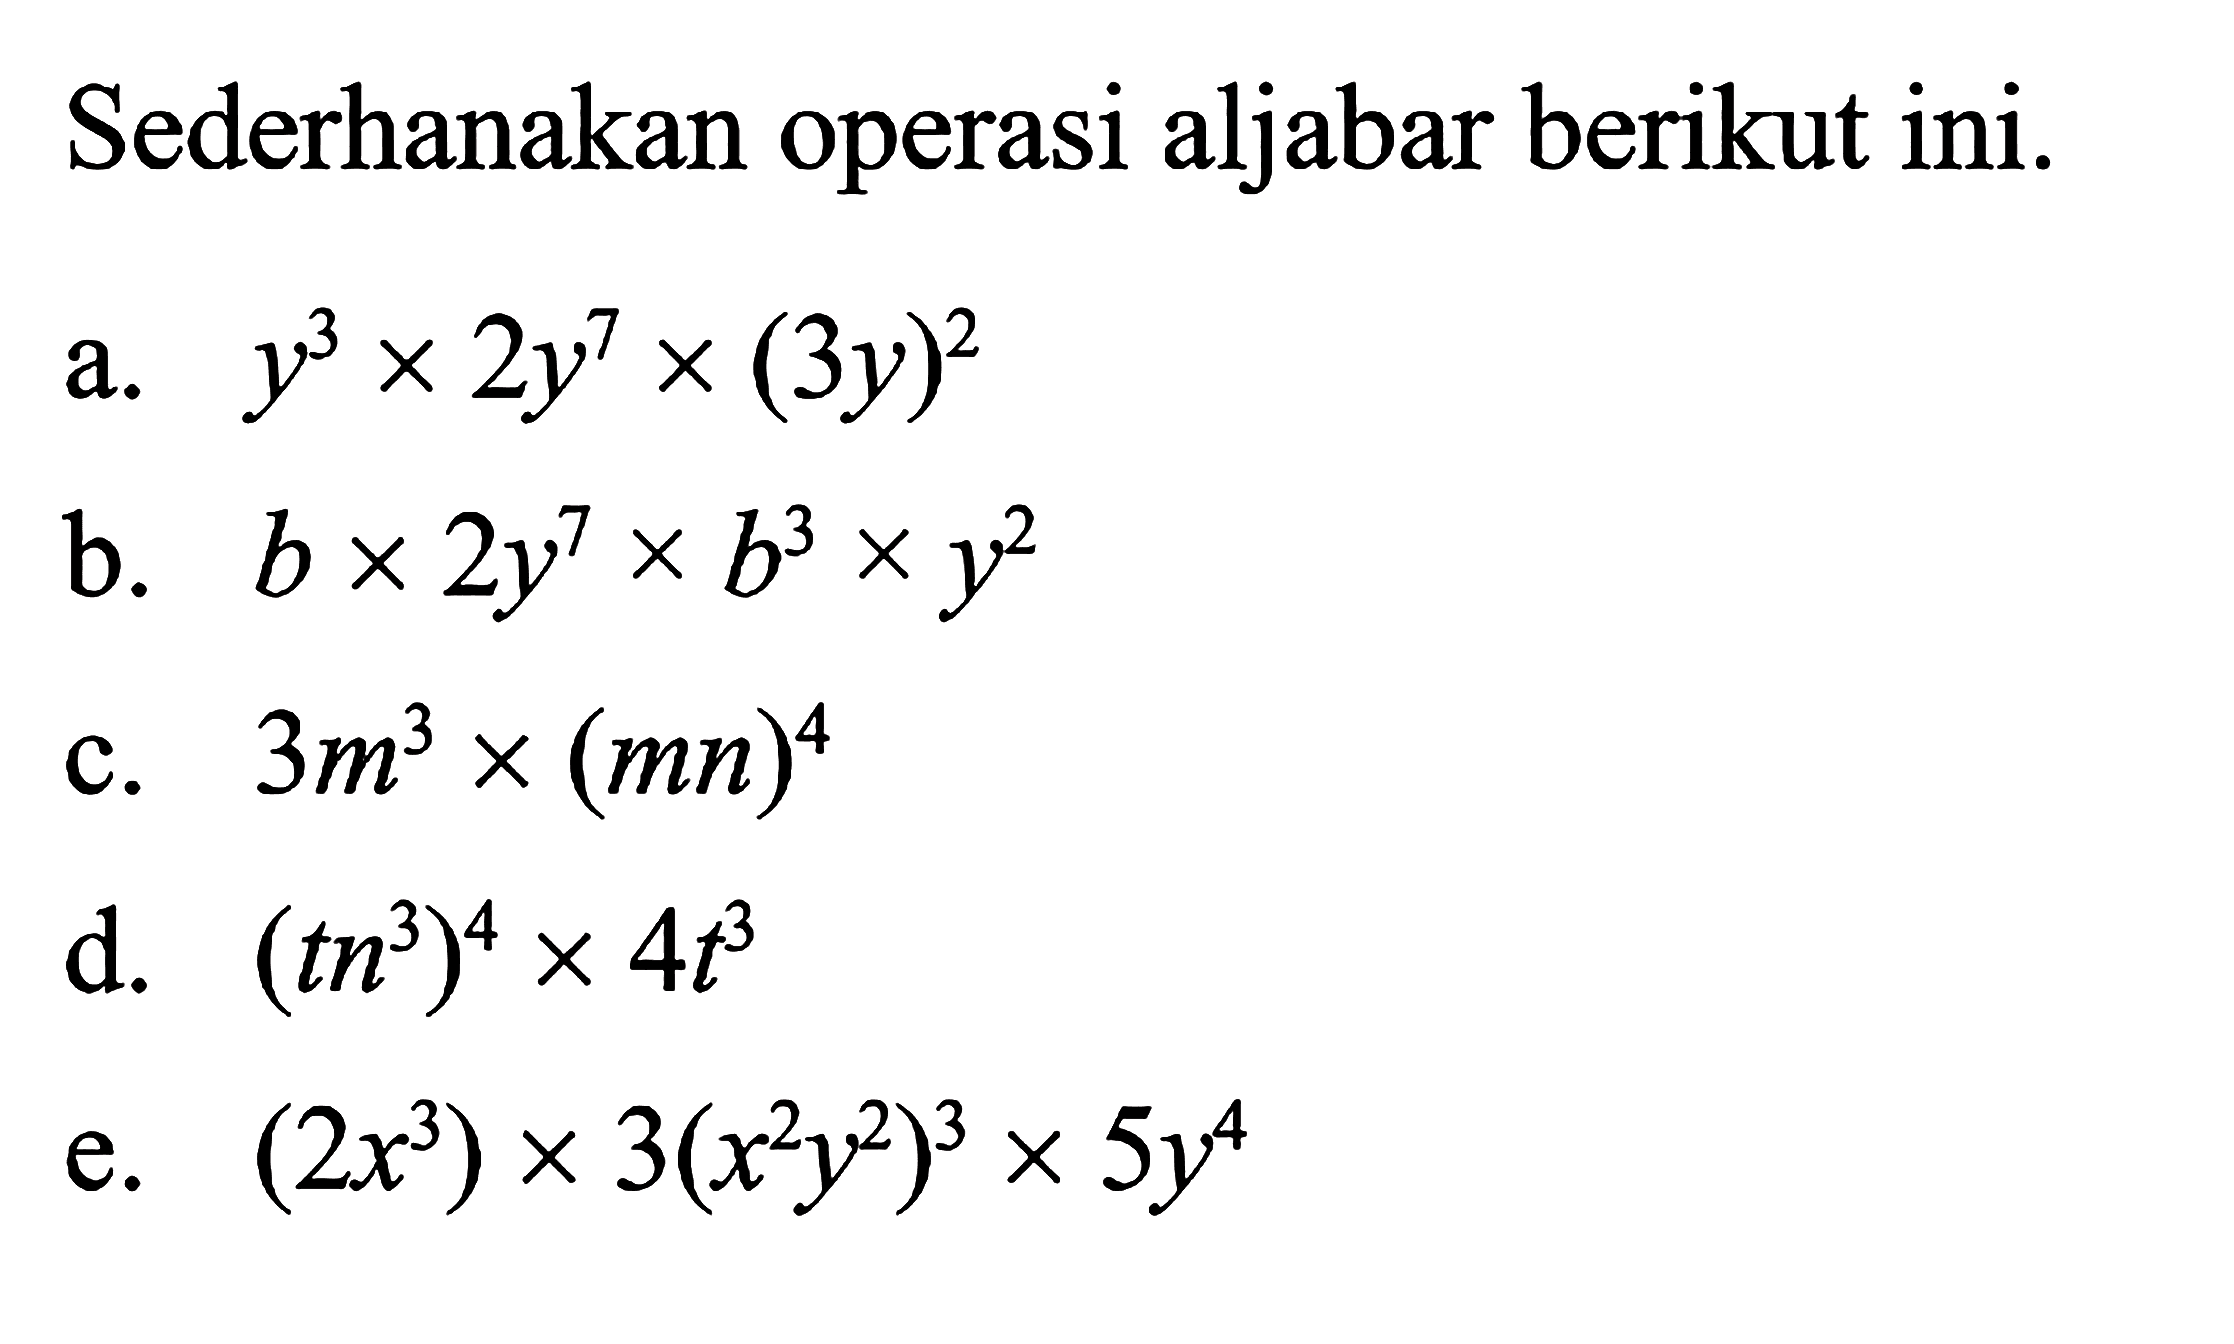 Sederhanakan operasi aljabar berikut ini.
 a. y^3 x 2y^7 x (3y)^2
 b. b x 2y^7 x b^3 x y^2
 c. 3m^3 x (mn)^4
 d. (tn^3)^4 x 4t^3
 e. (2x^3) x 3(x^2 y^2)^3 x 5y^4